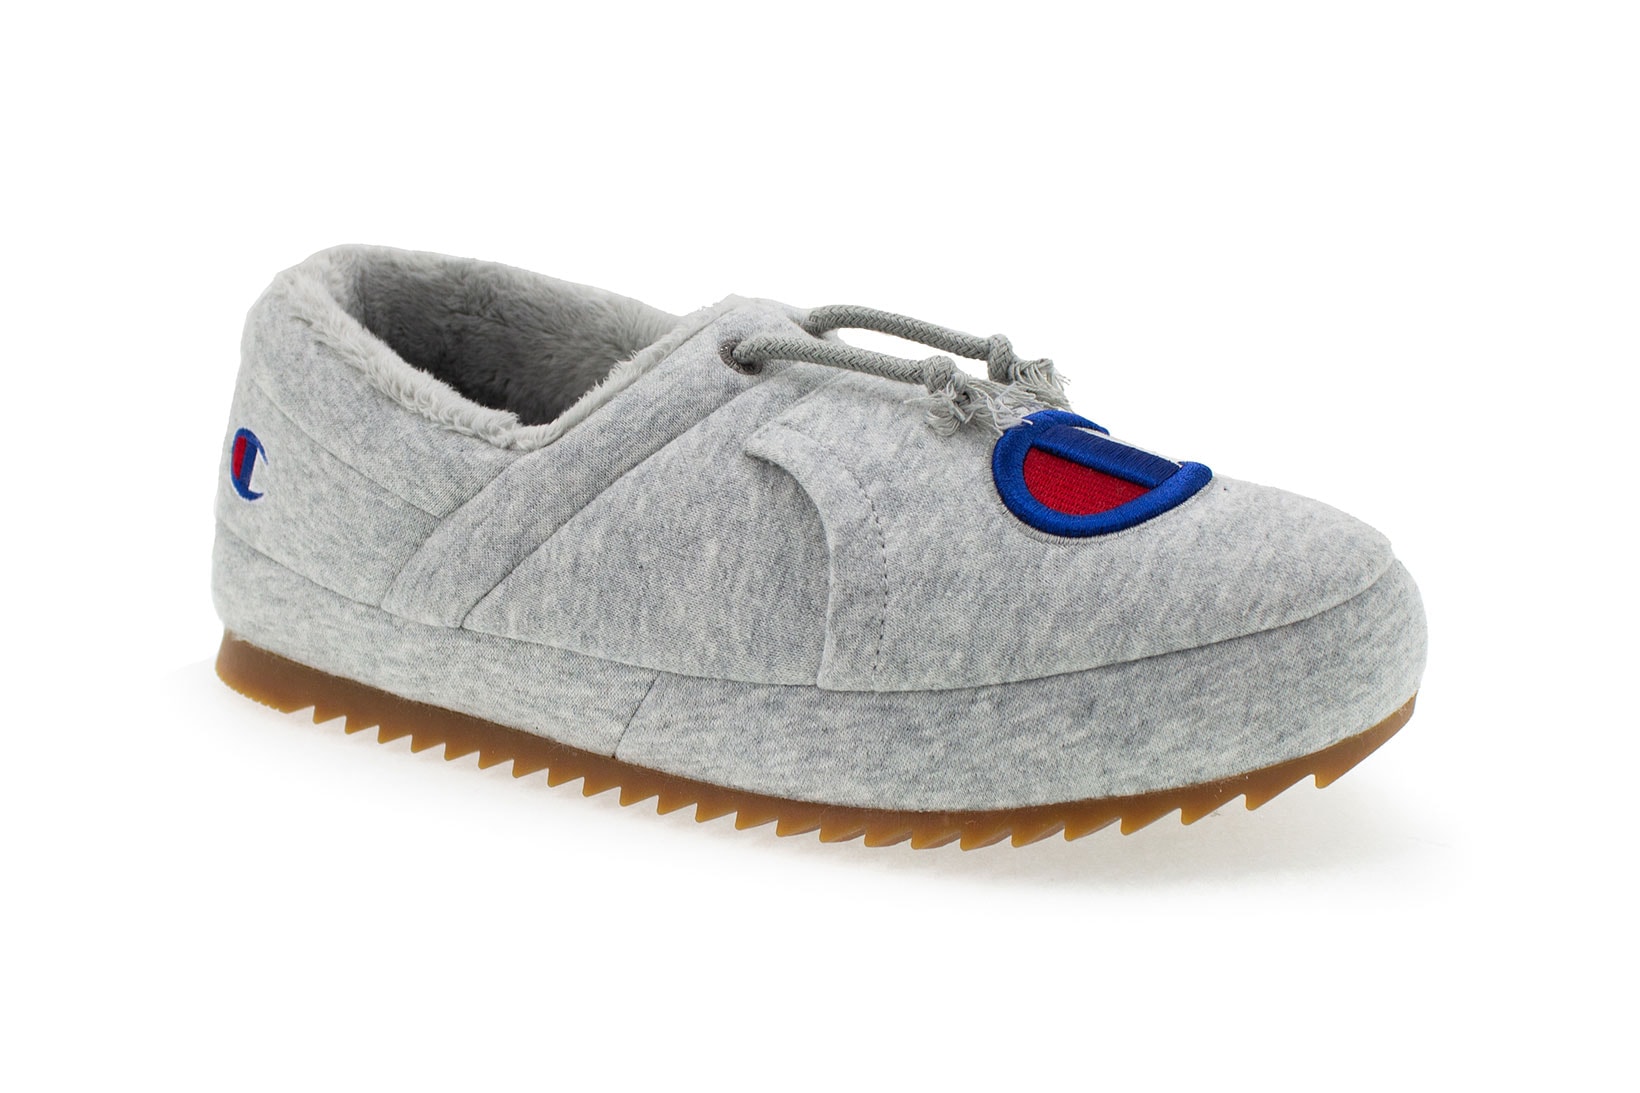 champion university slippers shoes reverse weave hoodies white grey red blue black loungewear